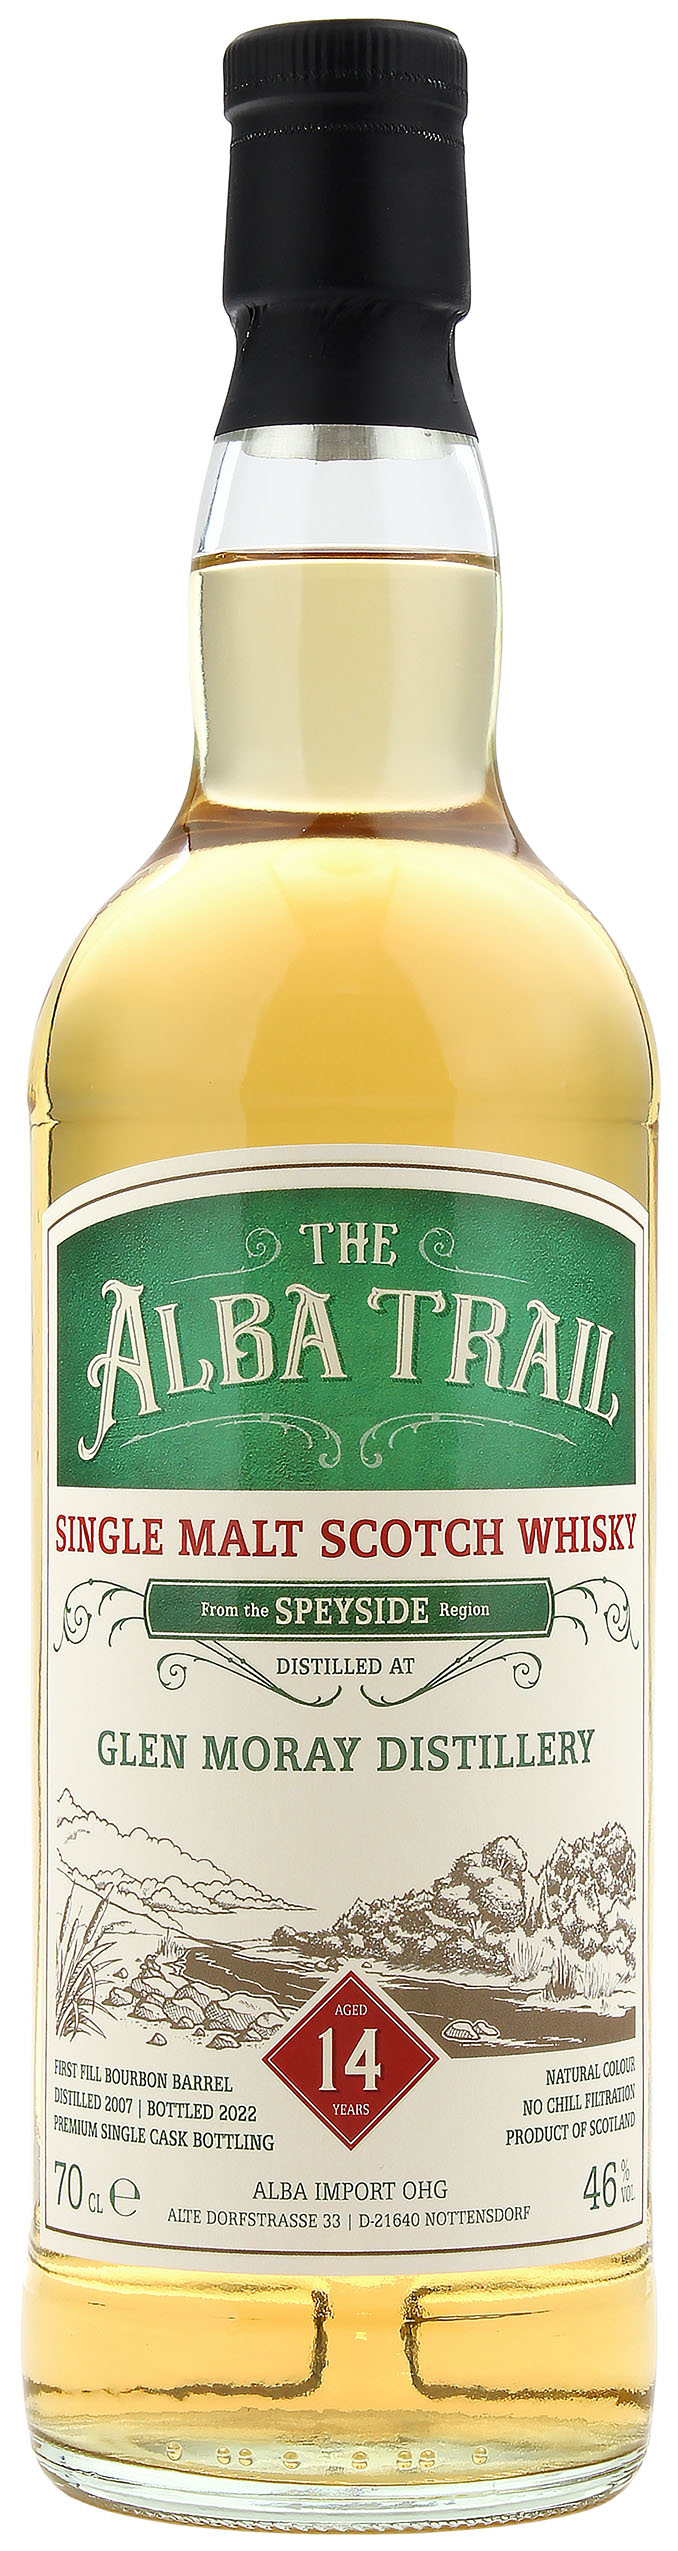 Glen Moray 14 Jahre 2007/2022 First Fill Bourbon Barrel The Alba Trail 46.0% 0,7l